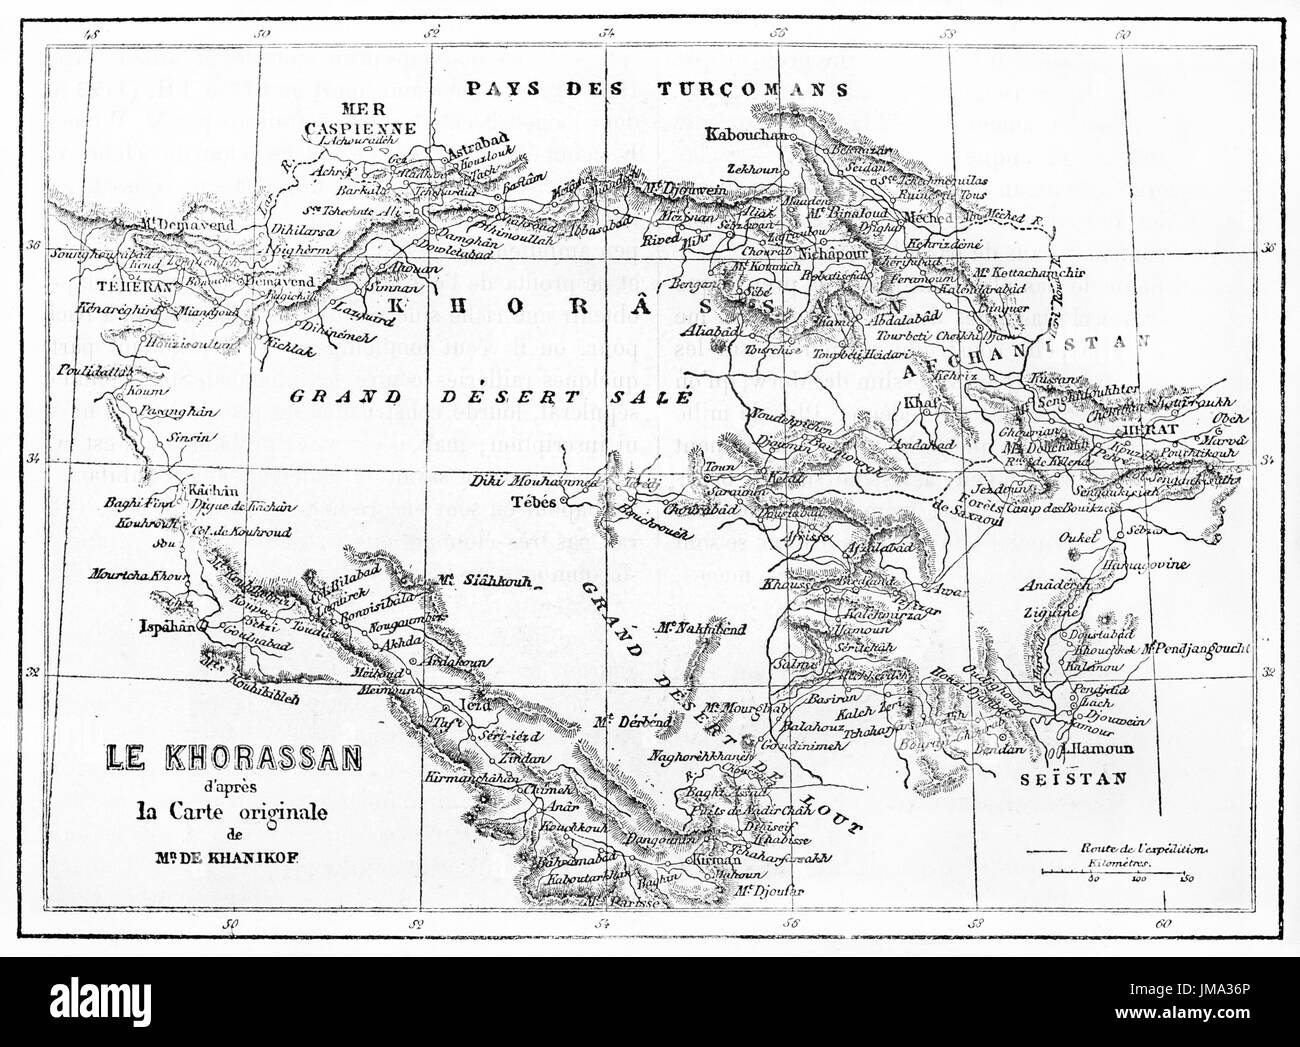 Old map of Khorasan, northeastern Iran. Engraved by Ehrard an Bonaparte, published on Le Tour du Monde, Paris, 1861 Stock Photo